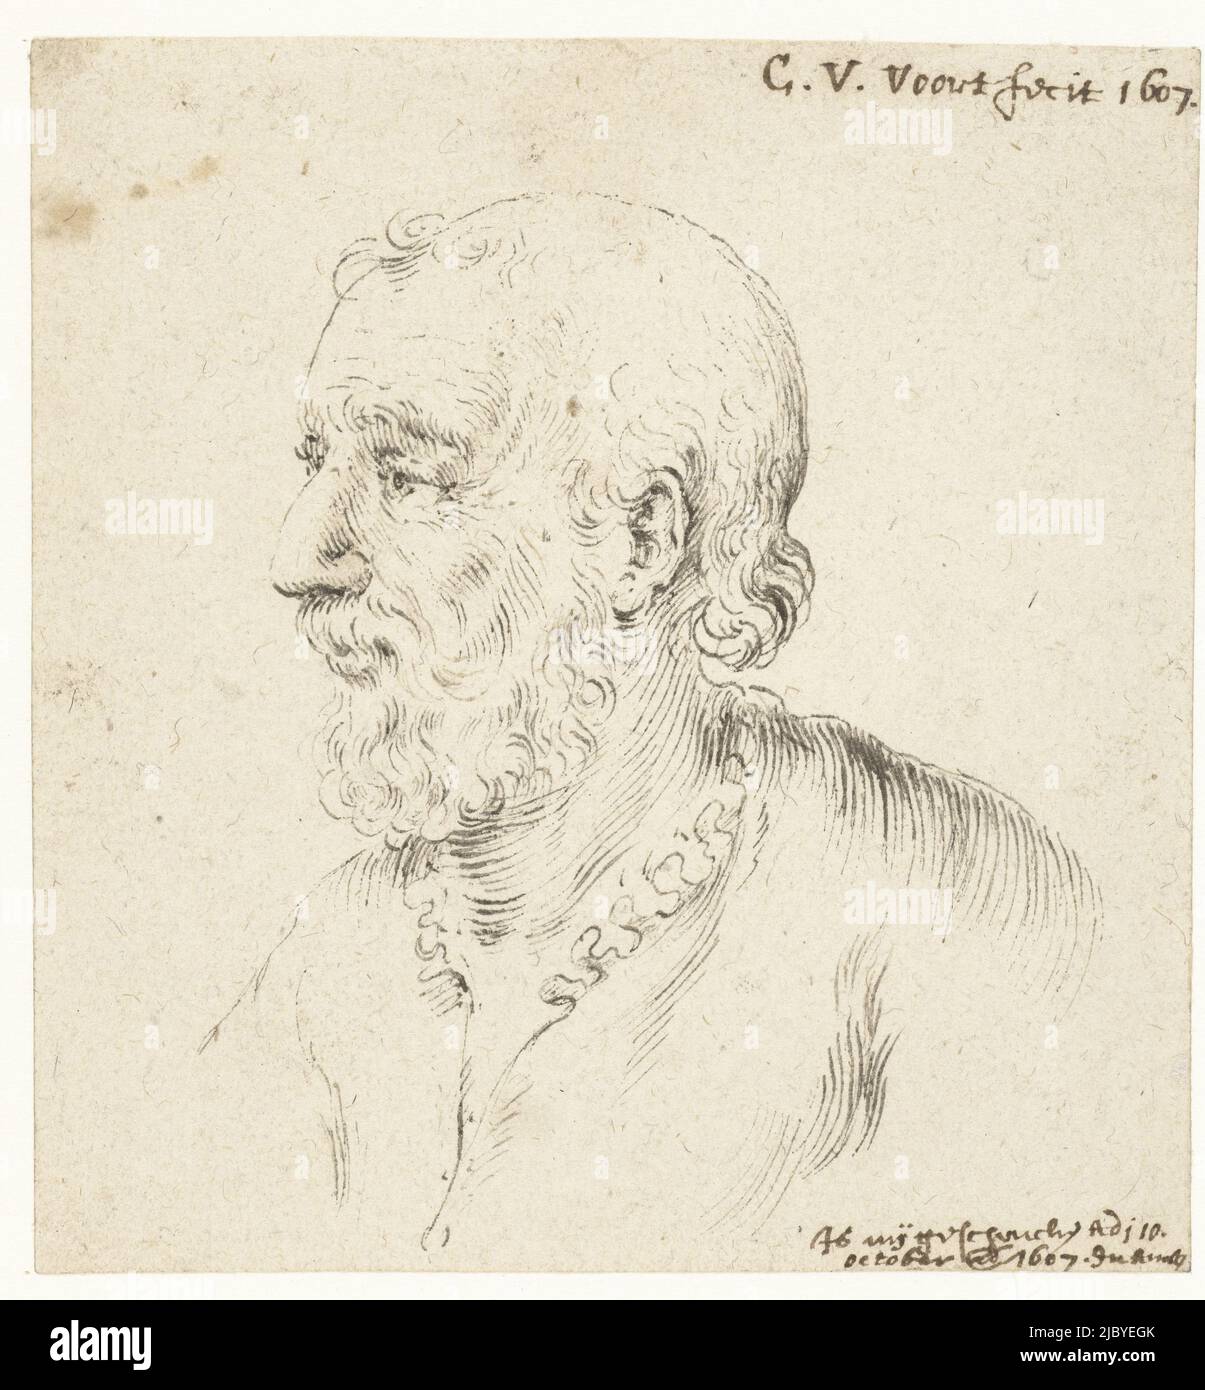 Kopf des Mannes mit Bart, im Profil links, Cornelis van der Voort, 1607, Zeichner: Cornelis van der Voort, 1607 - 10-Okt-1607, Papier, Stift, H 100 mm × B 95 mm Stockfoto